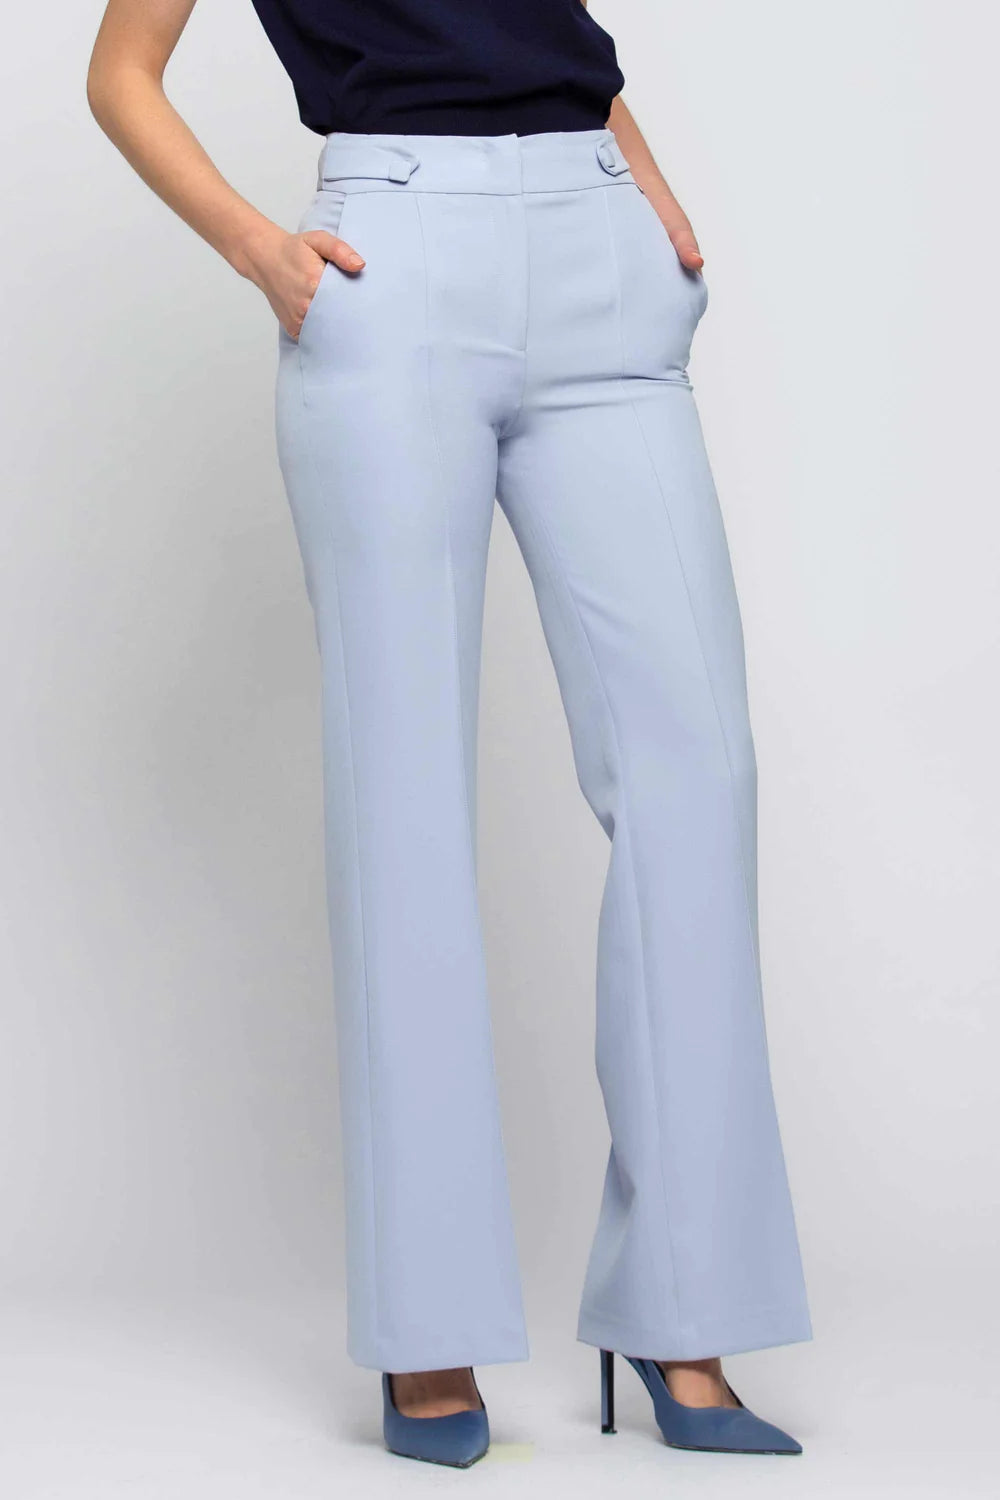 Pantalone con Bottoni Kocca / Celeste - Ideal Moda